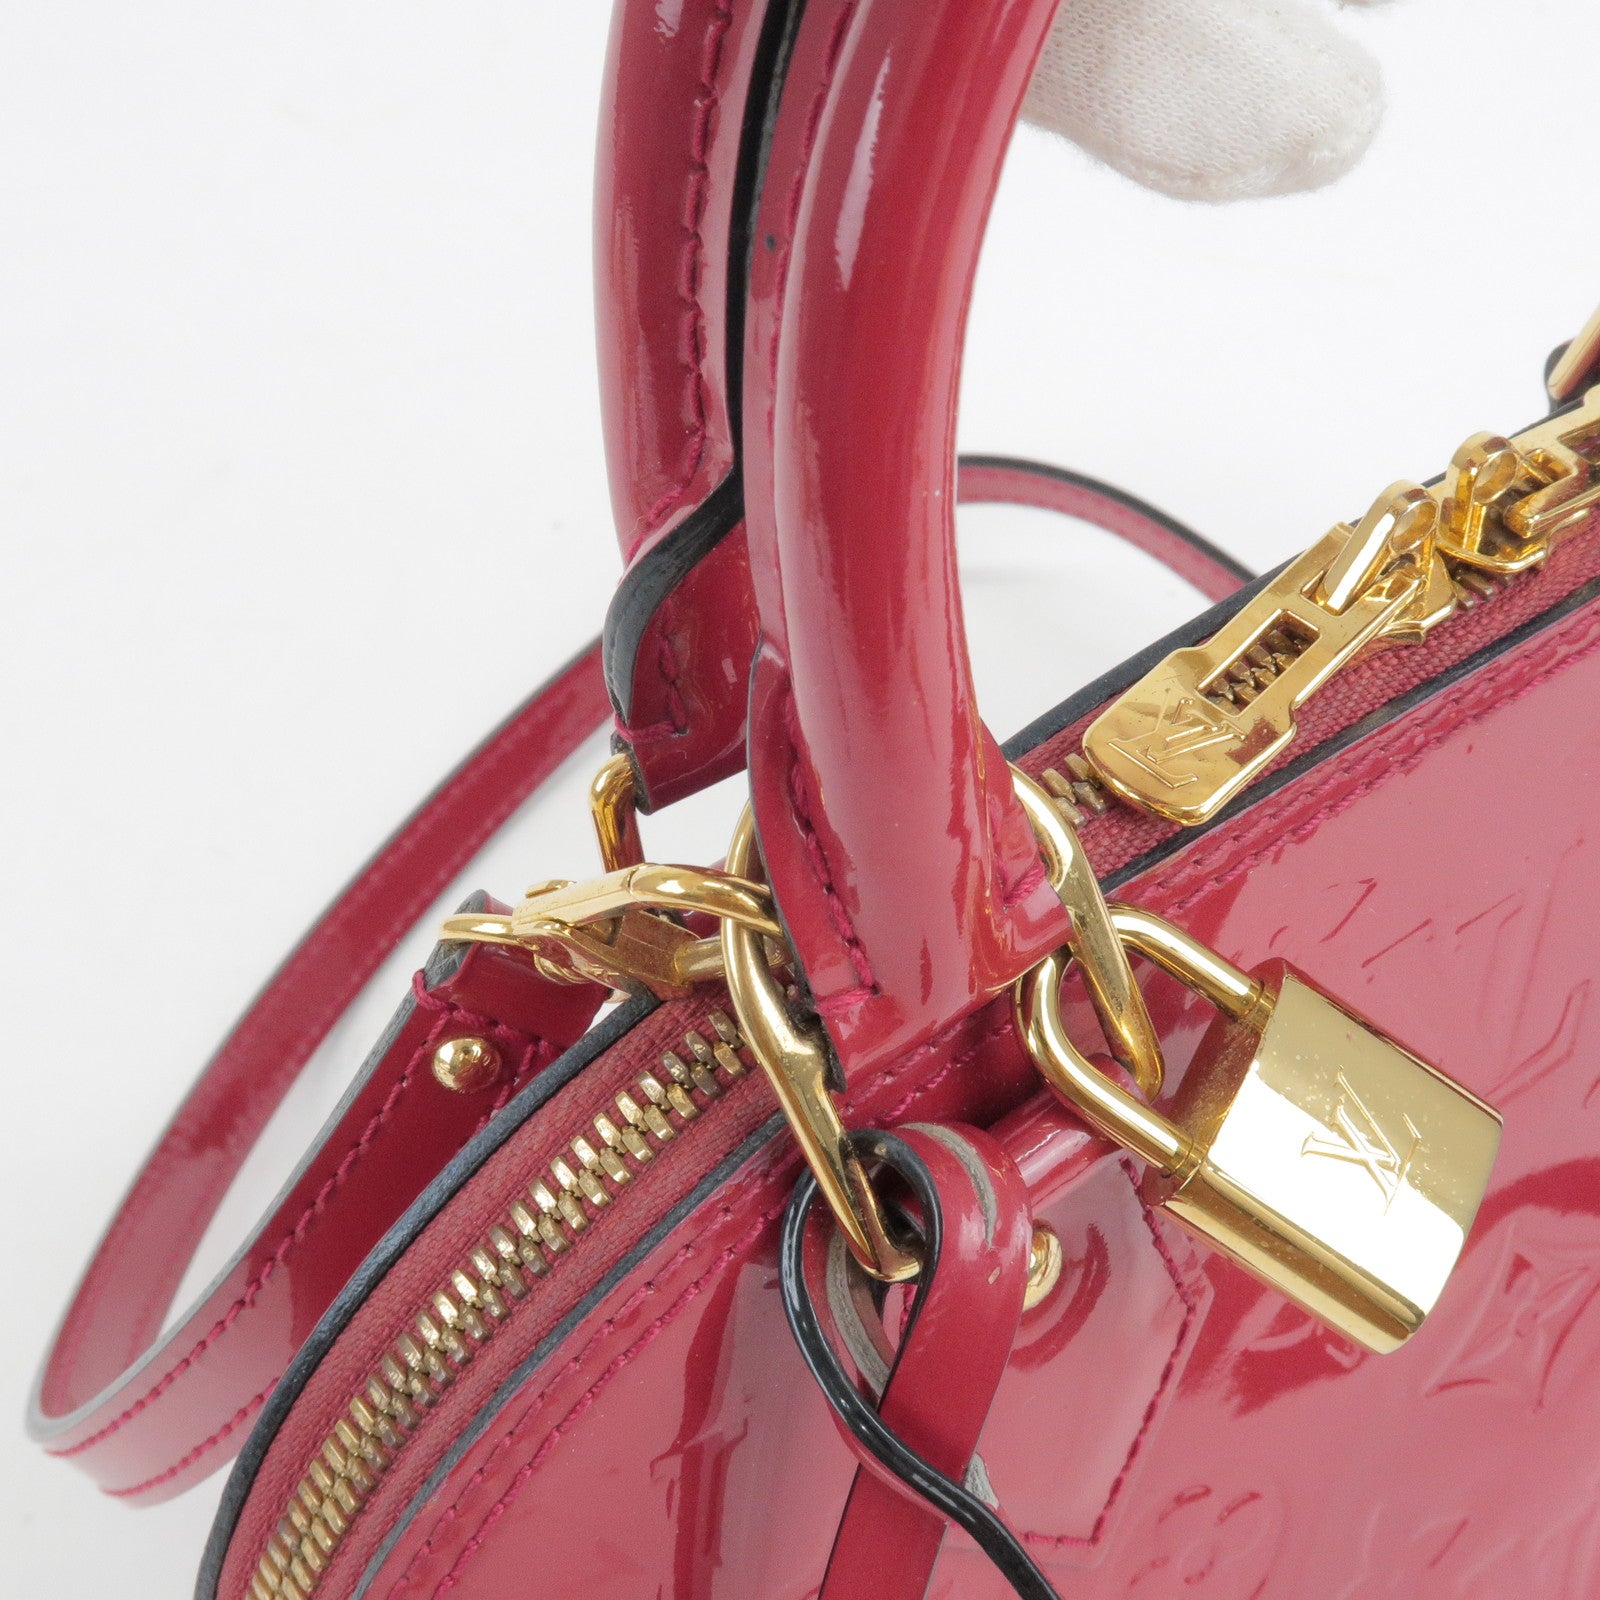 Louis Vuitton Vernis Shoulder Bag Medium